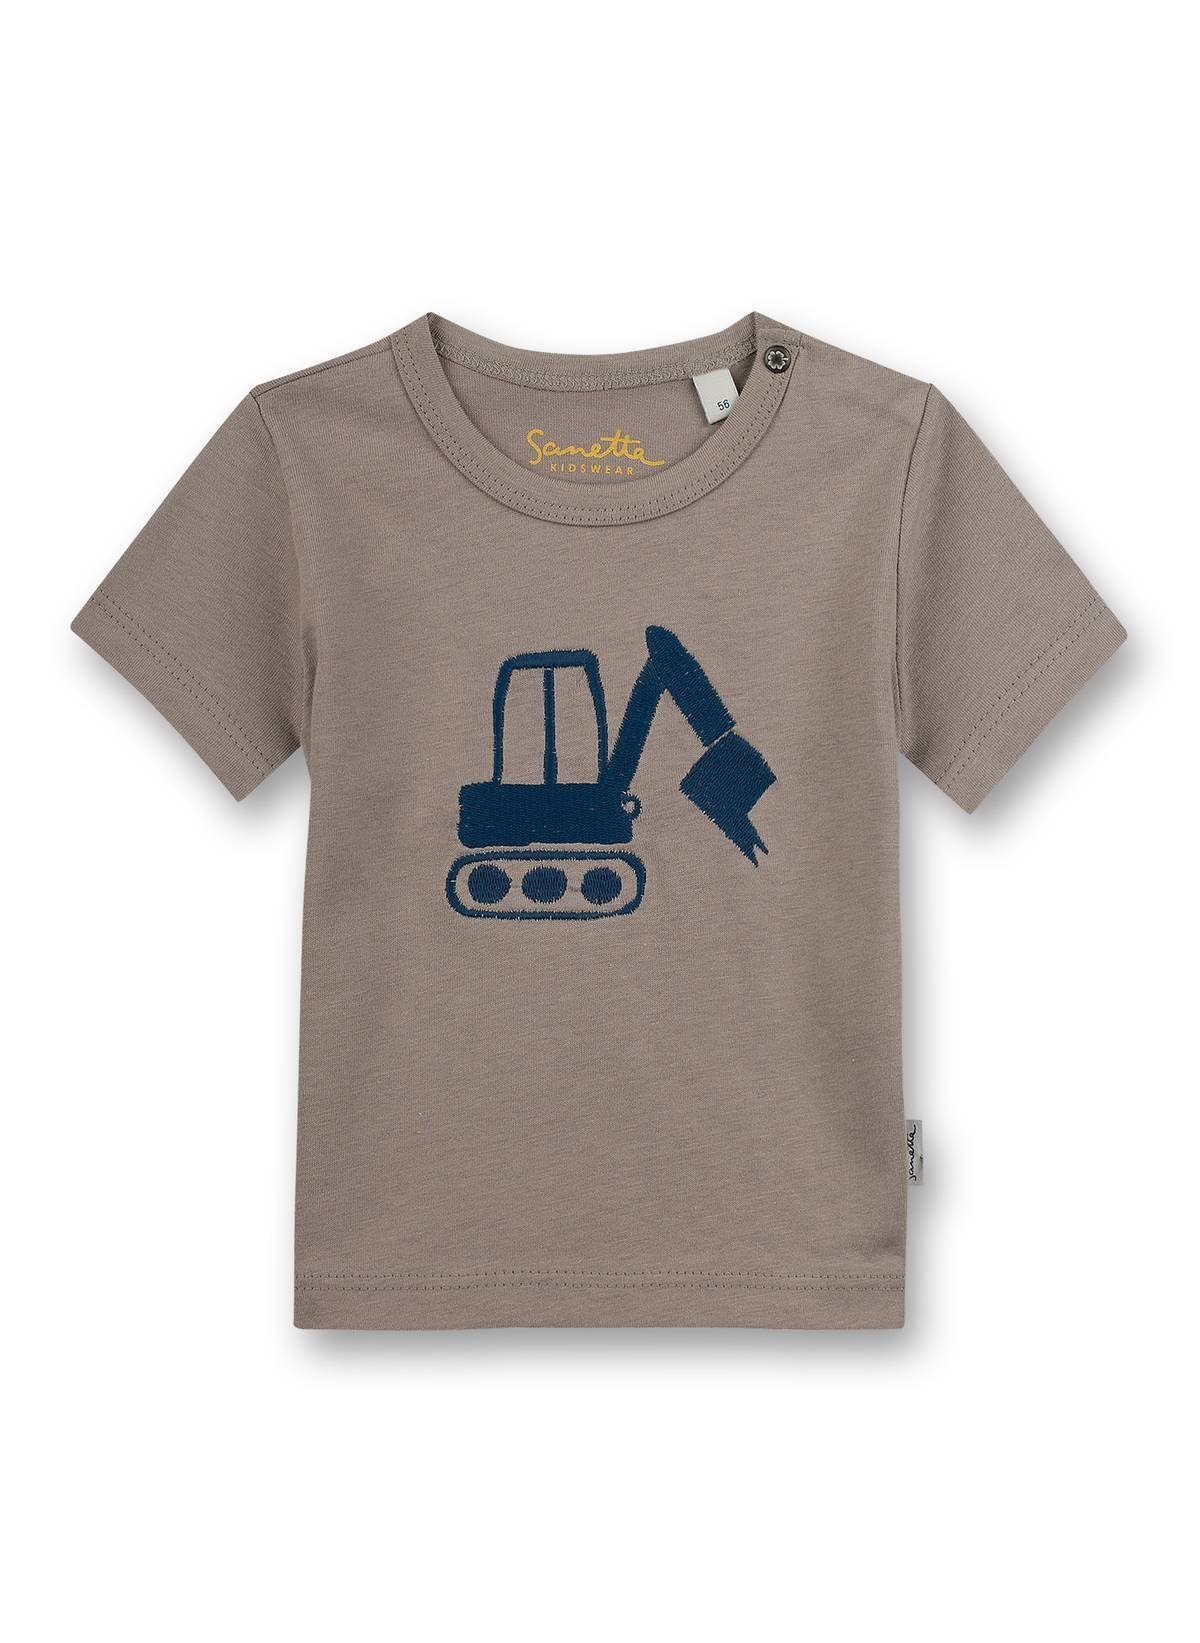 Sanetta T-Shirt Rundhals Jungen Braun T-Shirt Baby, Kurzarm, 